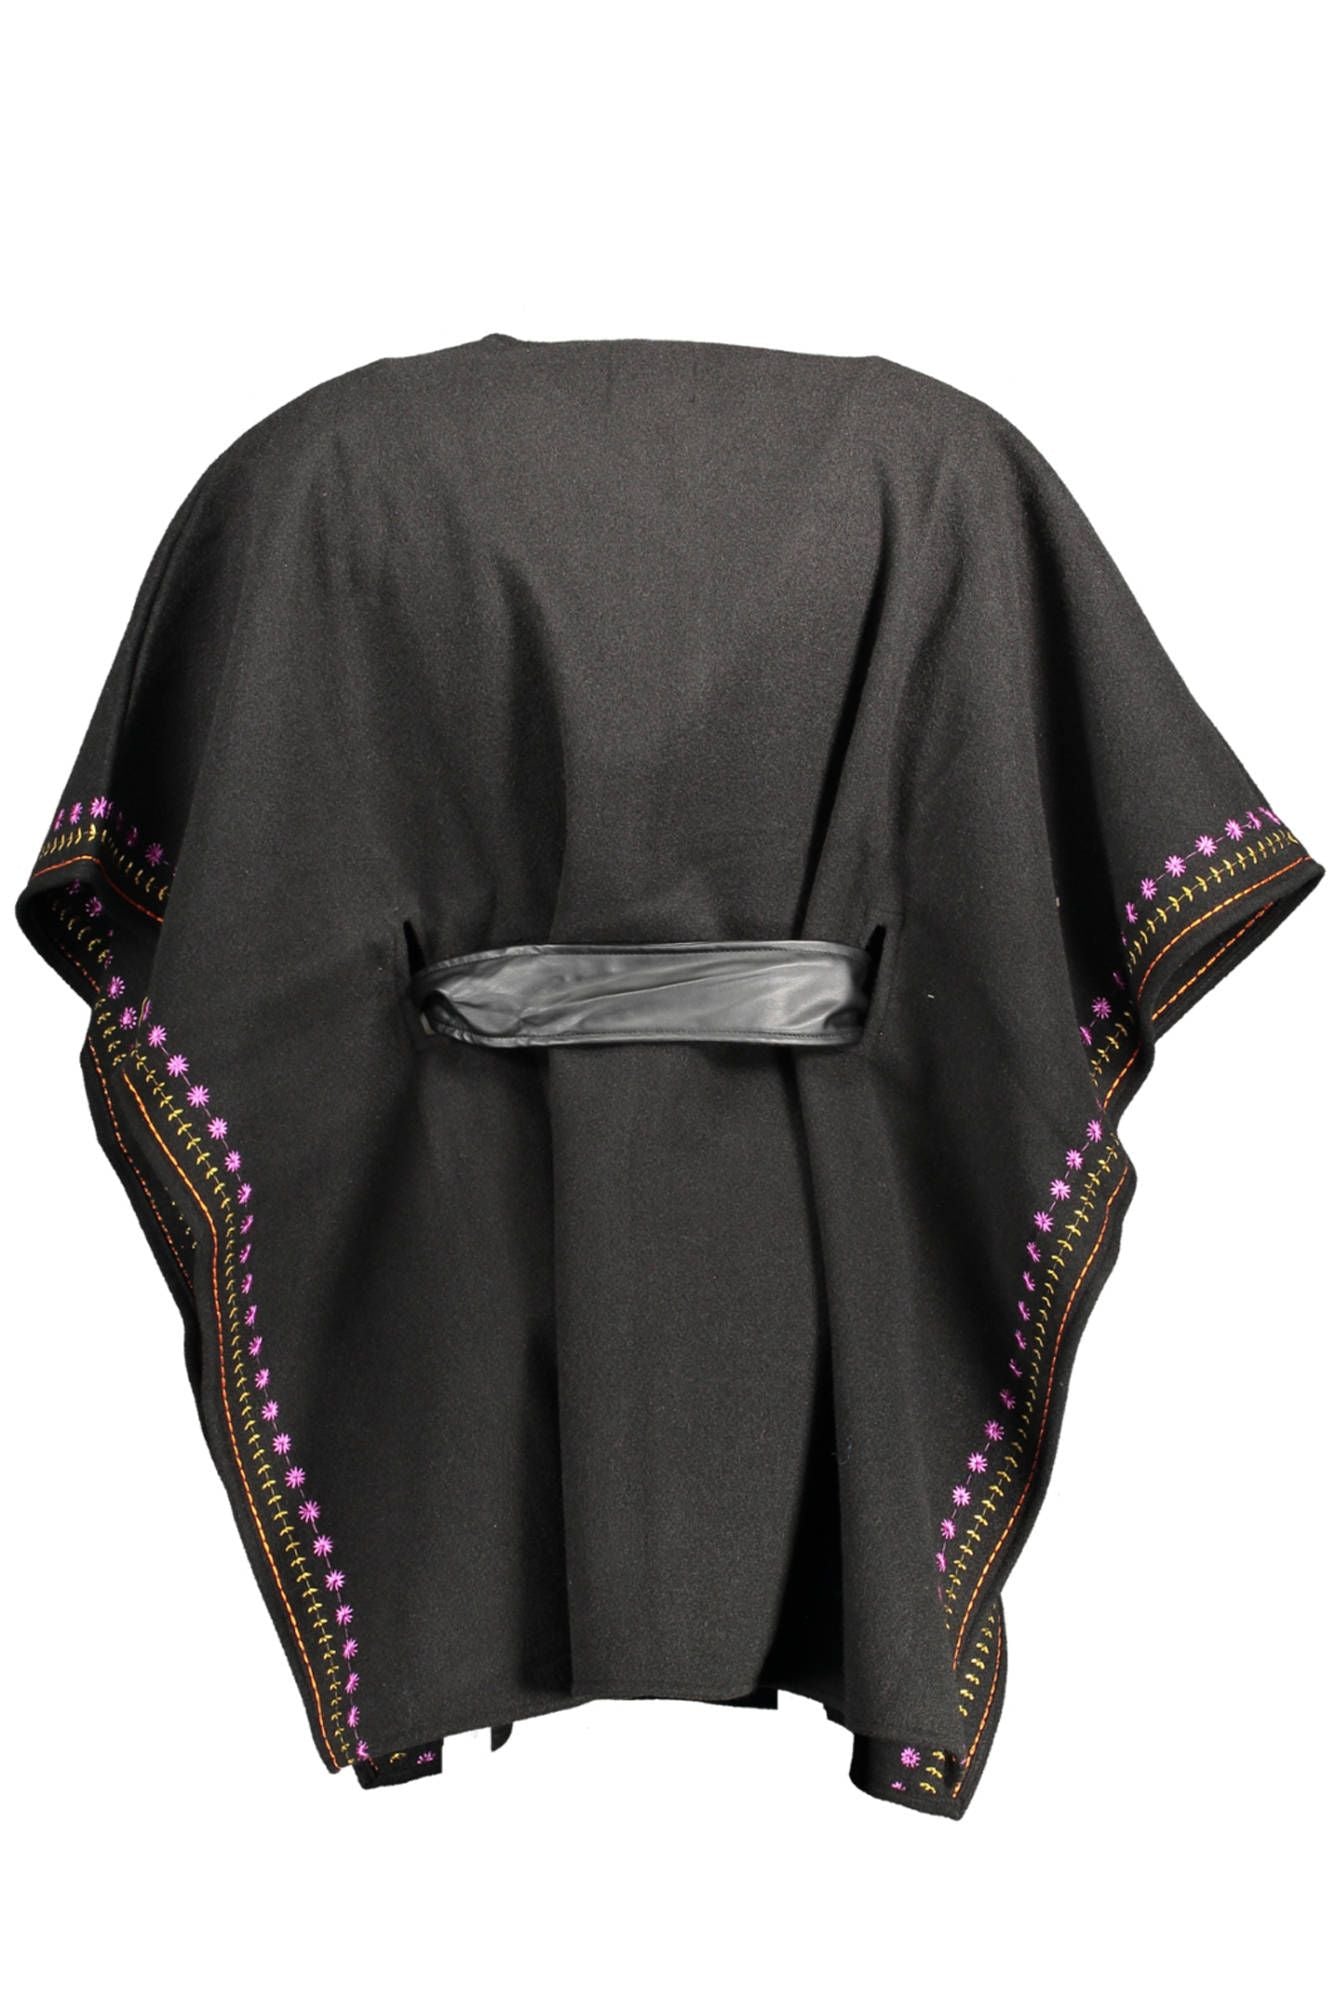 Desigual Elegant Black Poncho with Contrasting Details